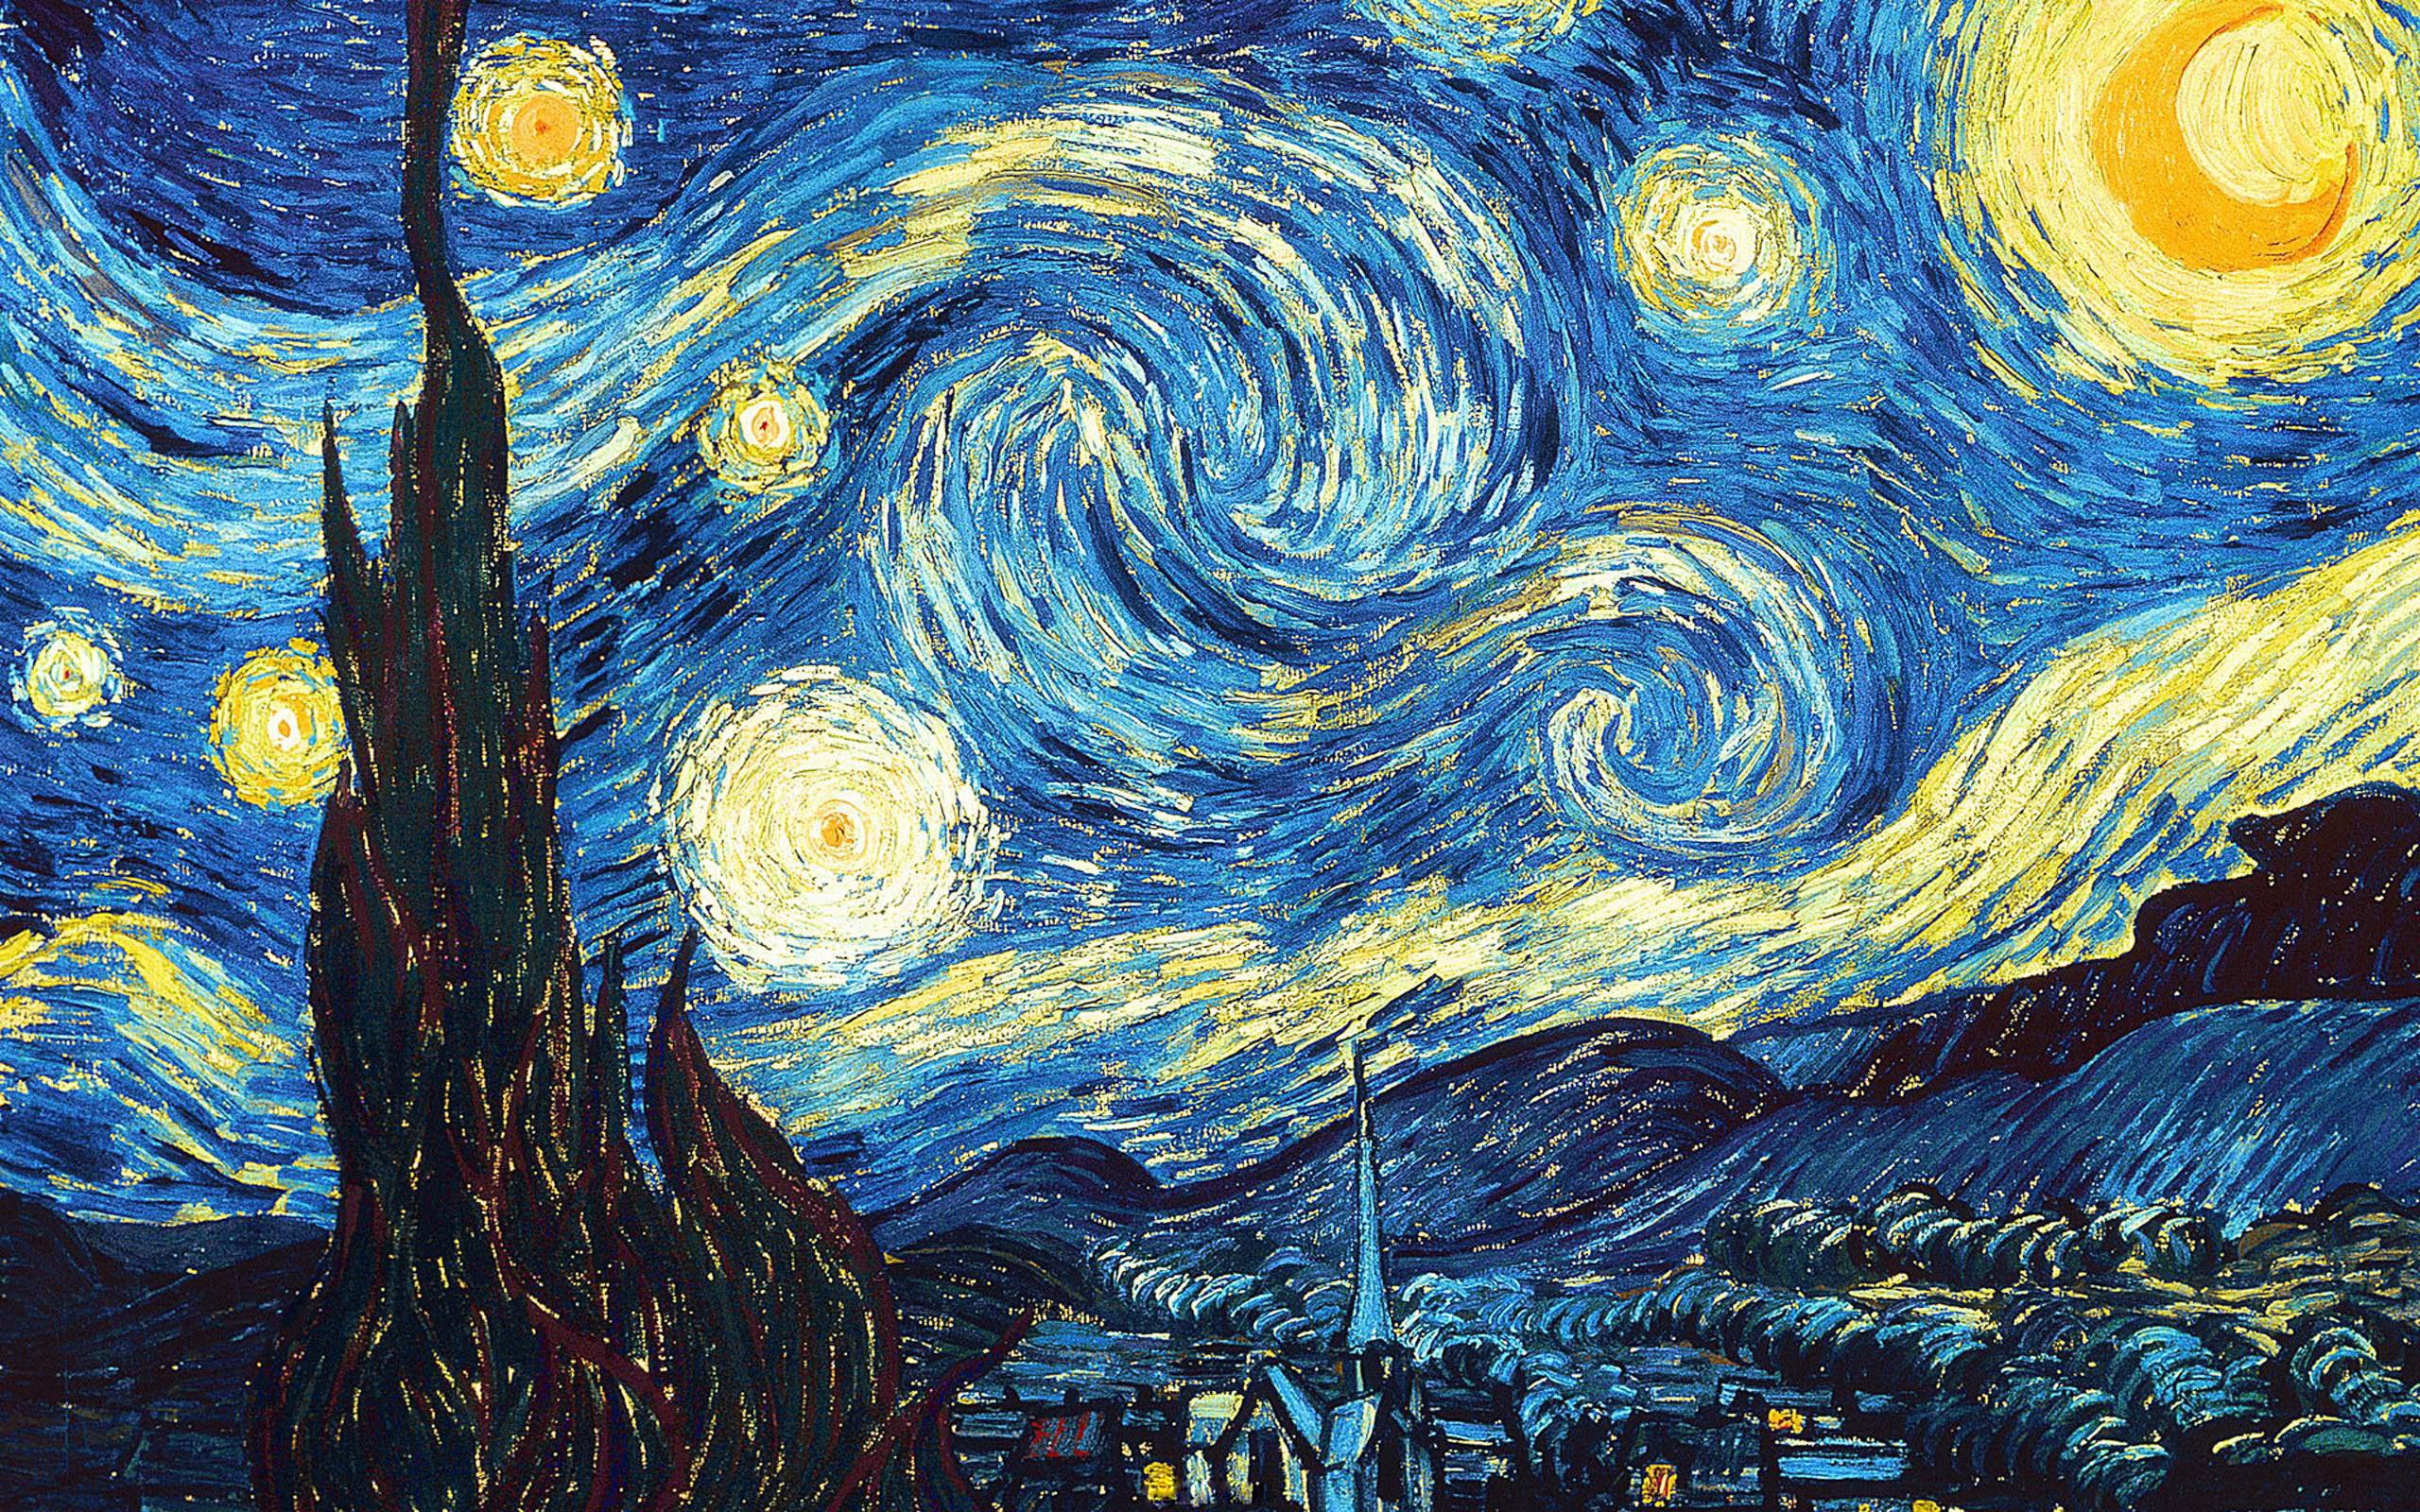 General 2560x1600 The Starry Night painting abstract starry night blue cyan yellow artwork Vincent van Gogh digital art classic art